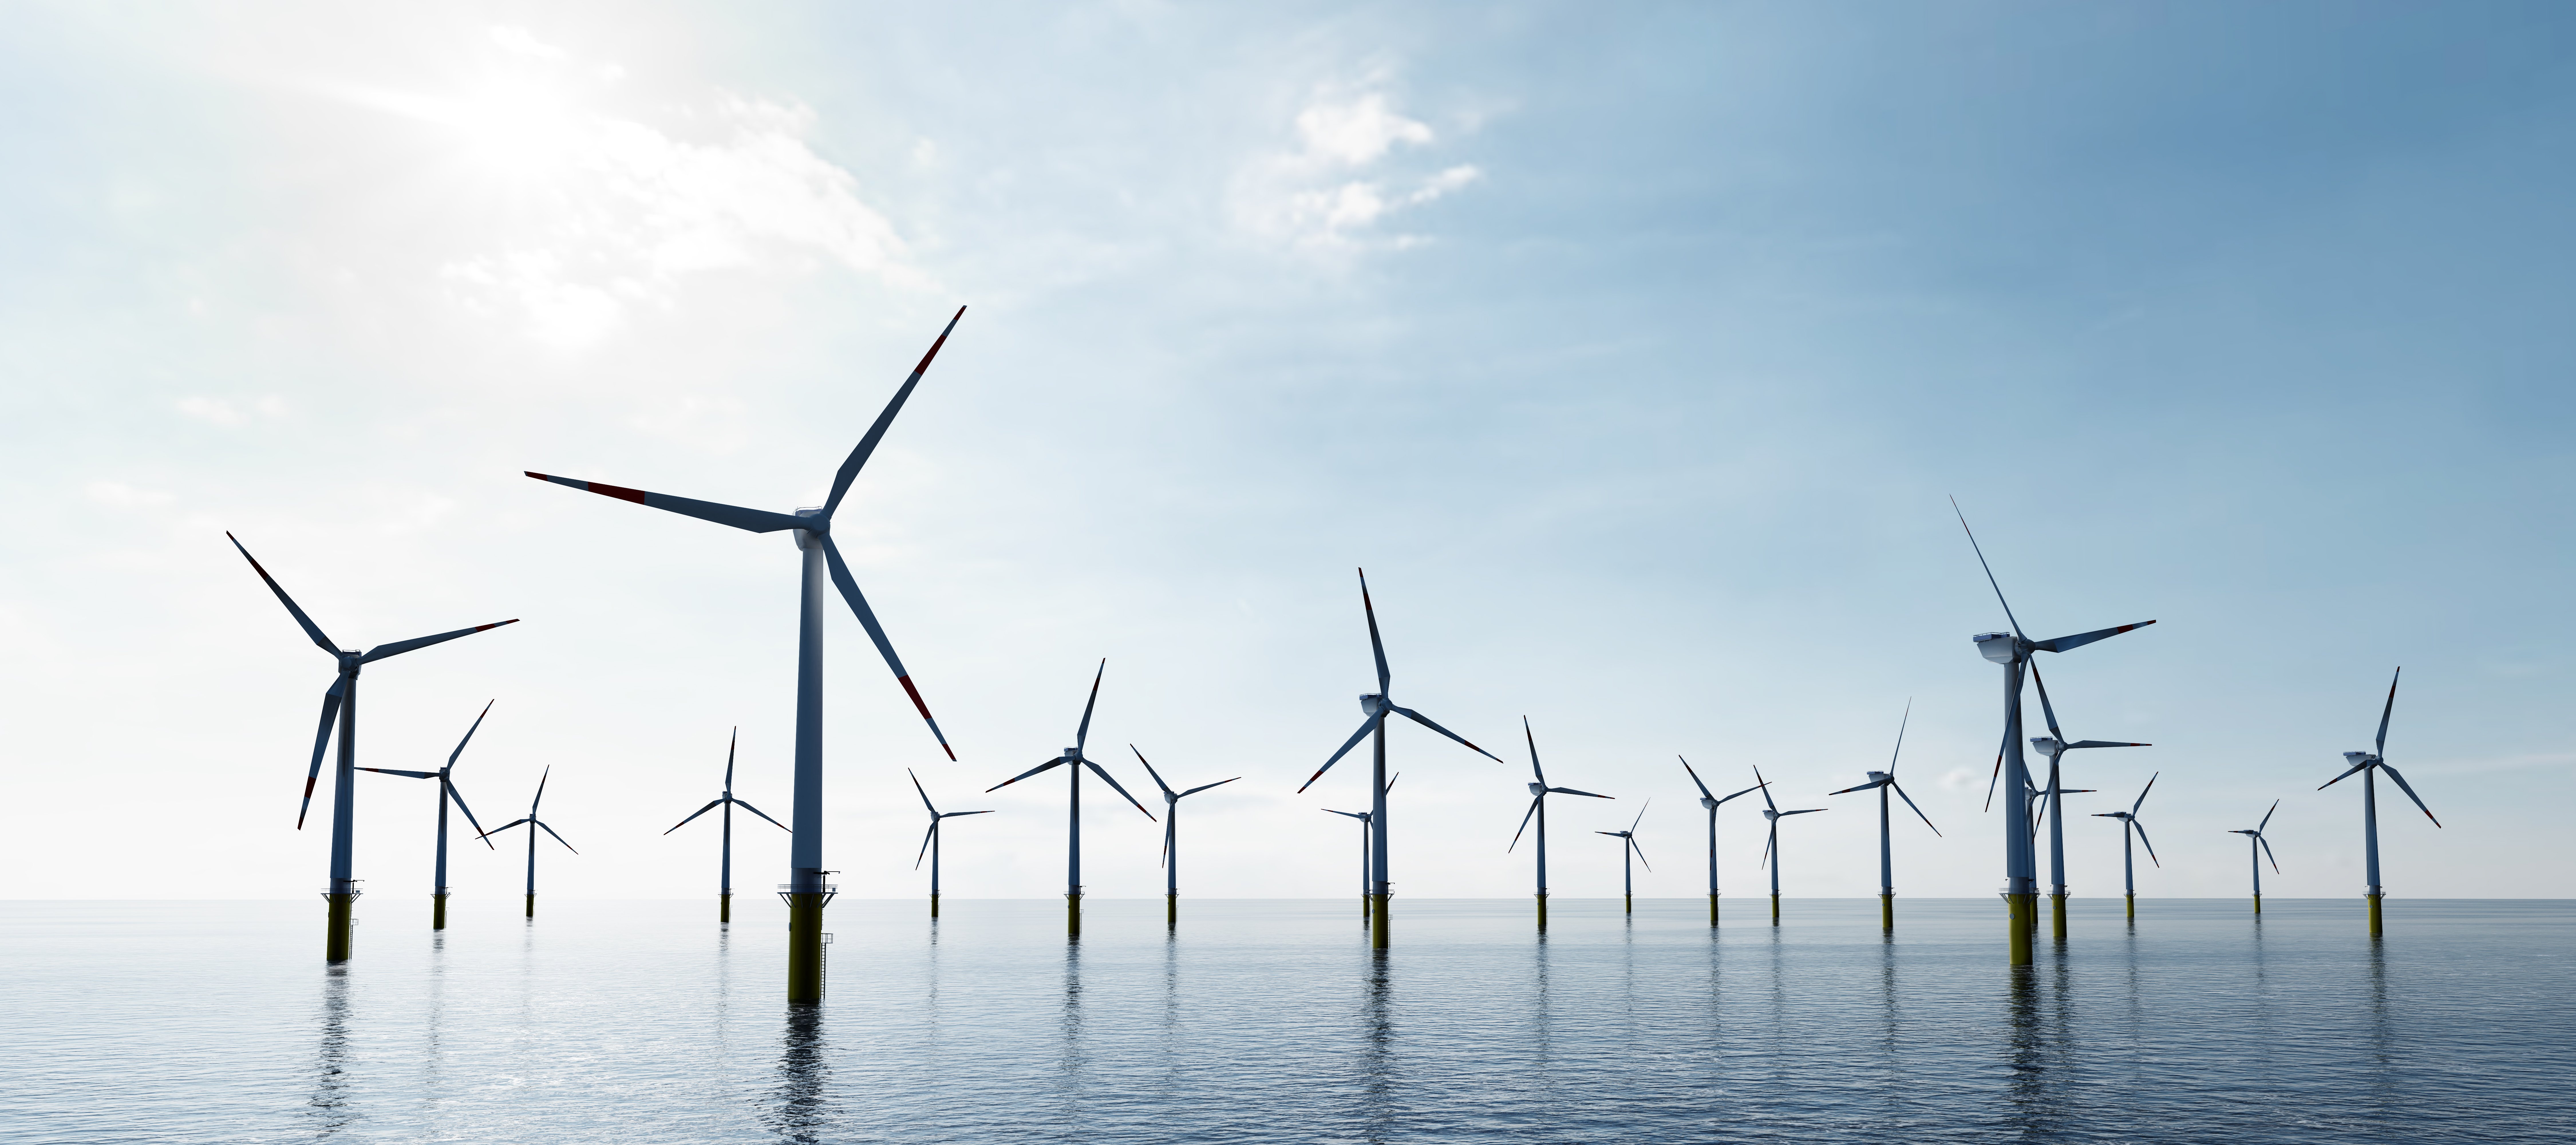 offshore-wind-turbines-farm-on-the-ocean-sustaina-2021-04-04-11-14-22-utc